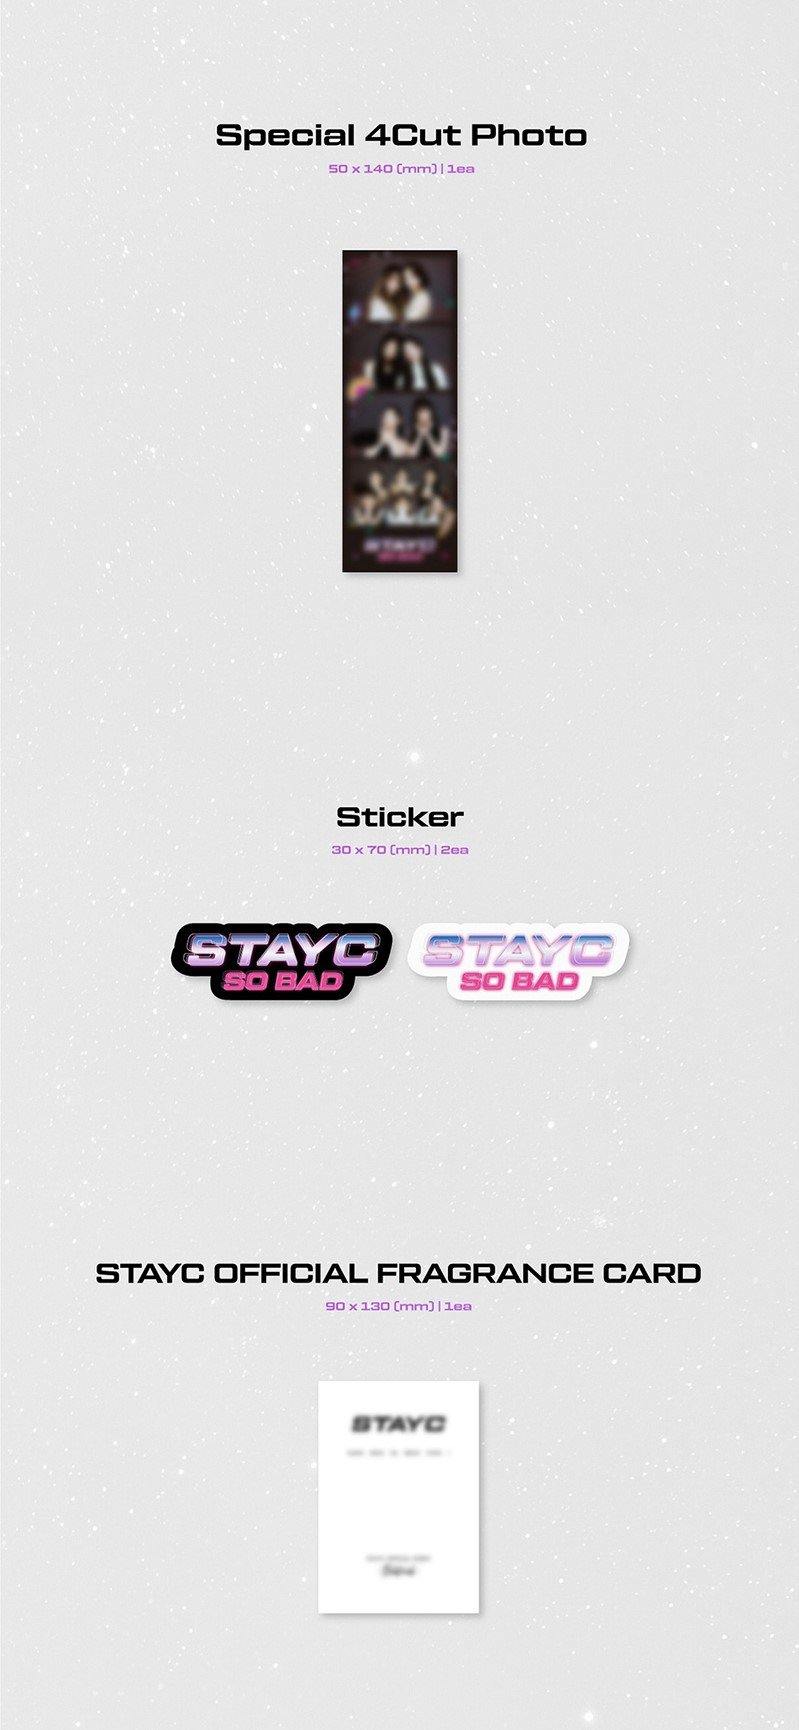 STAYC - Single Vol.1 - So Bad - J-Store Online